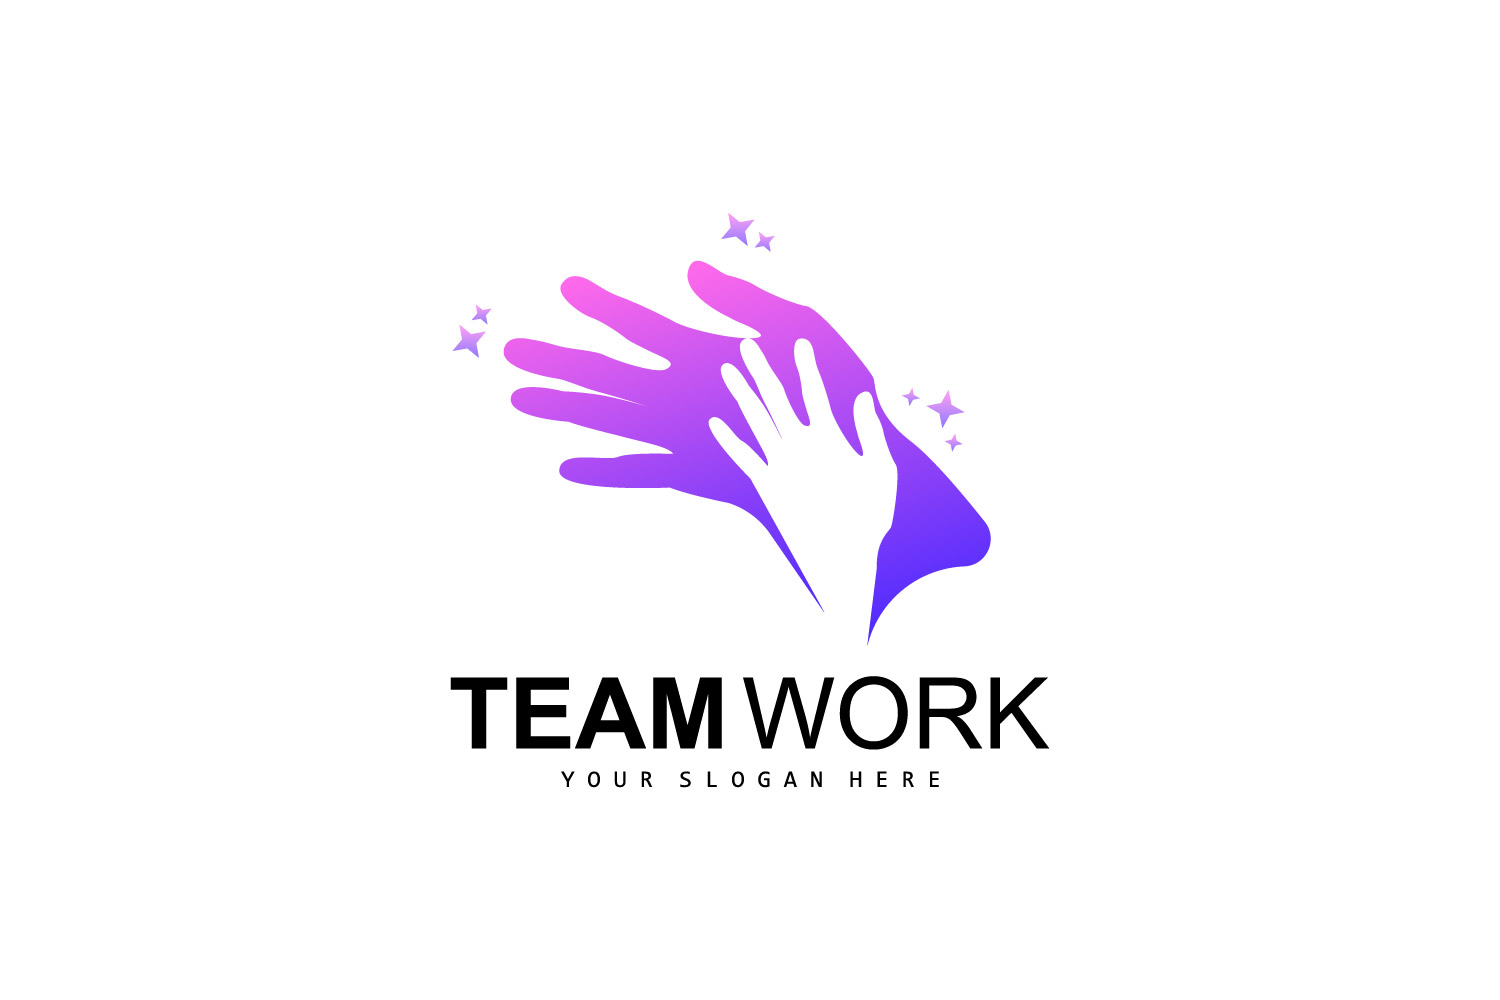 Hand Logo Teamwork Vector  Company DesignV6